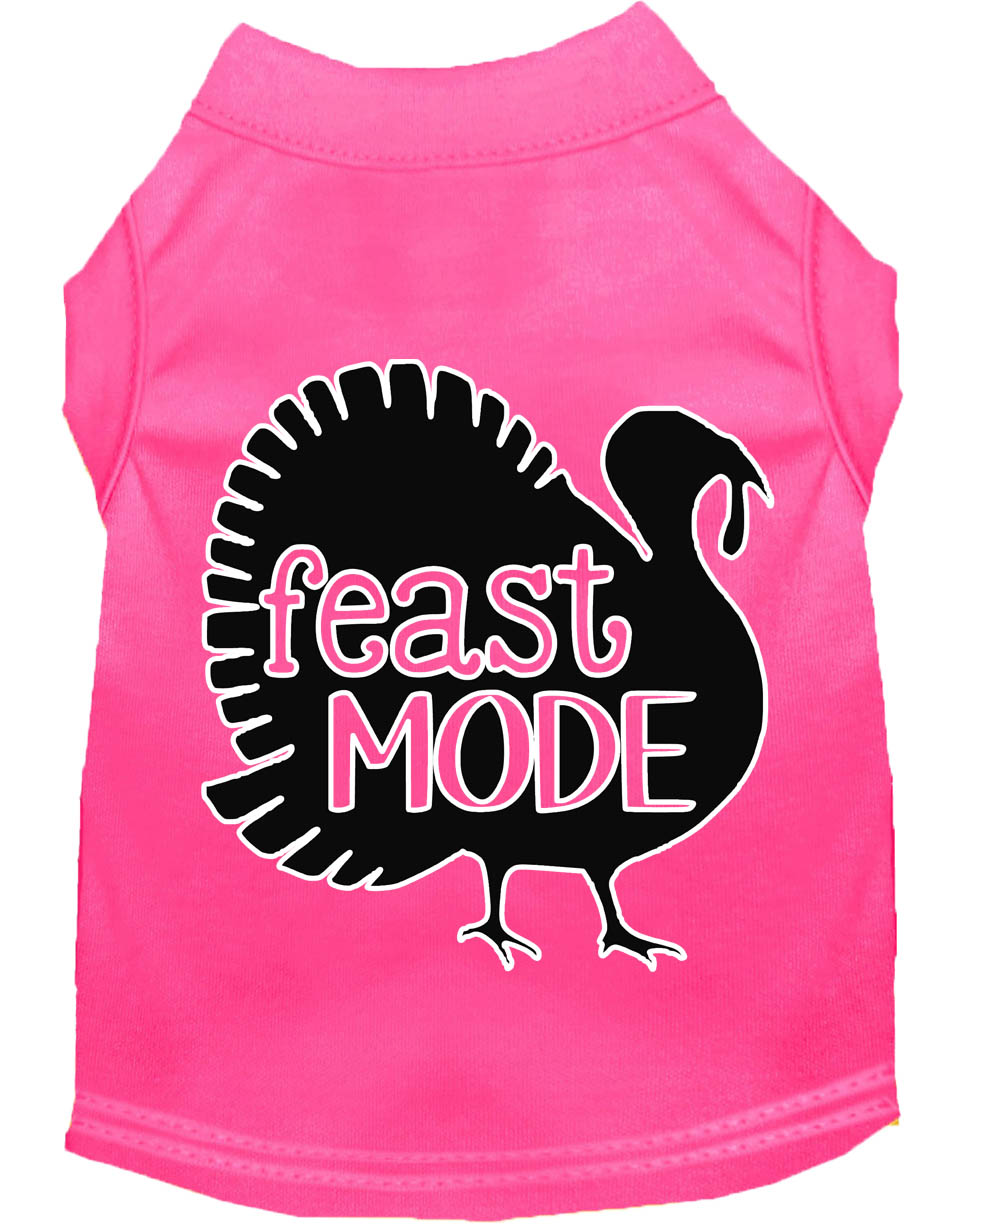 Feast Mode Screen Print Dog Shirt Bright Pink Lg